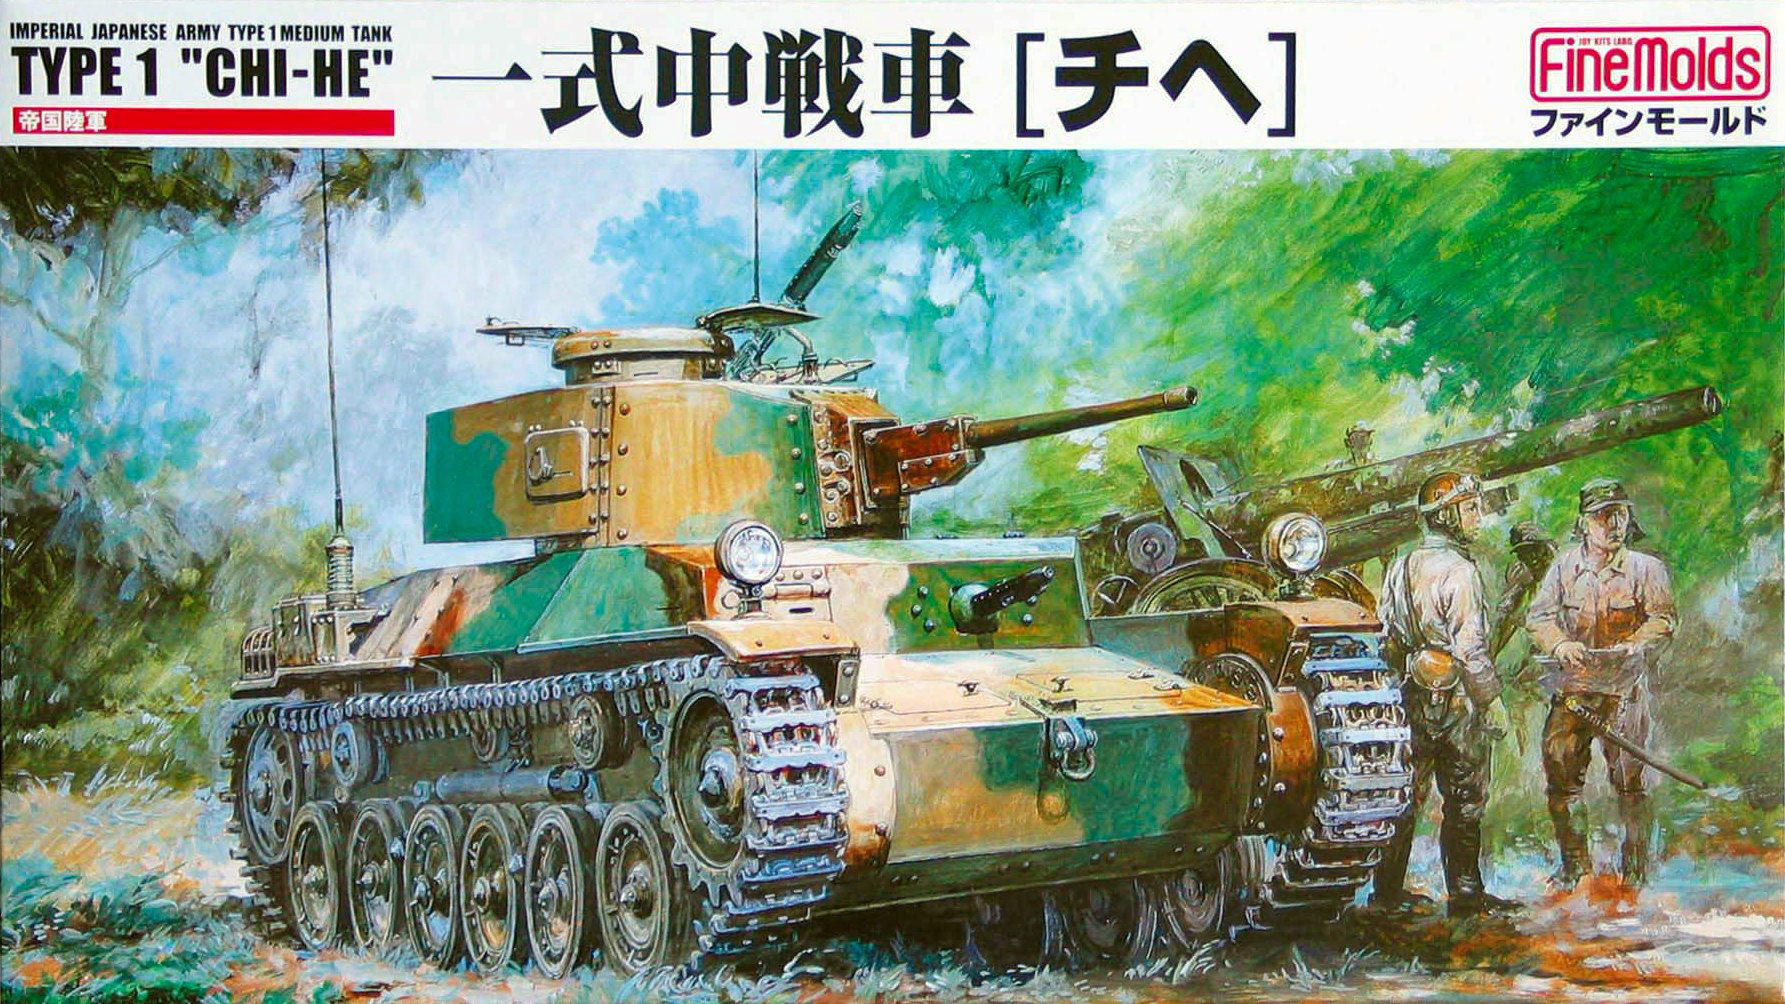 FM12  техника и вооружение  IJA Type1 Medium Tank "Chi-He" (1:35)